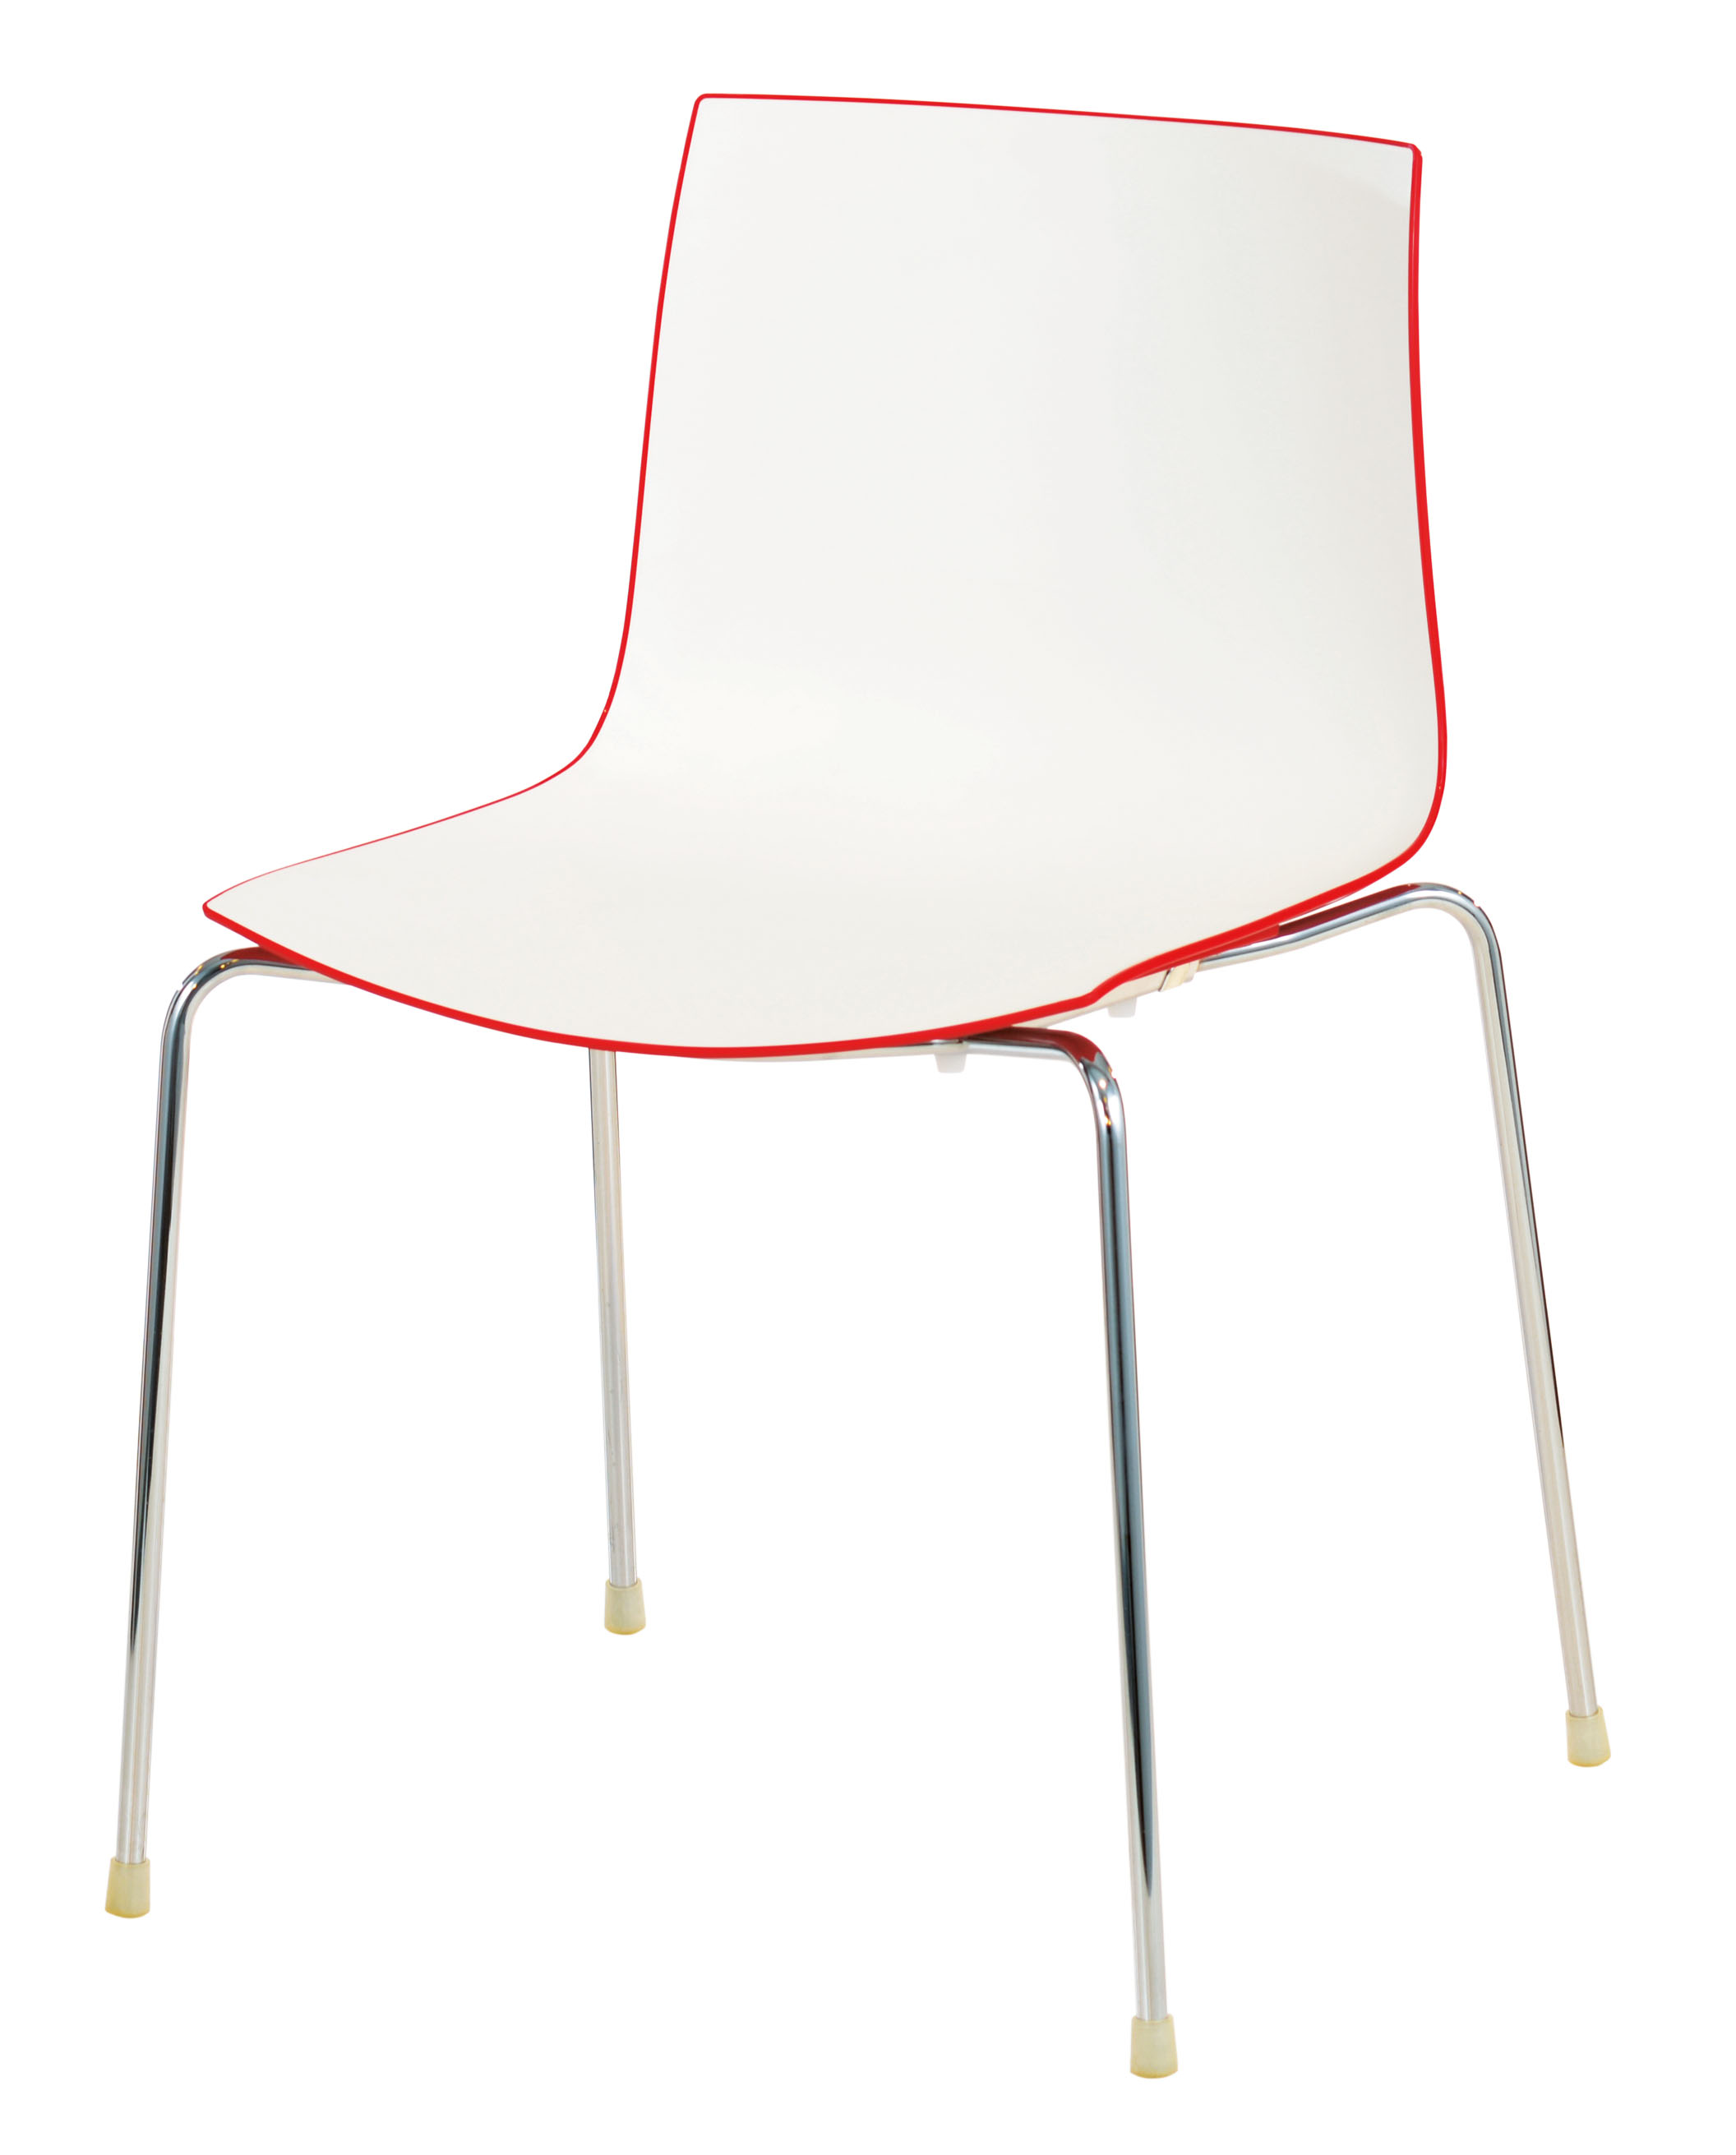 Designer-Stuhl Catifa 46: Filigran für Indoor & Outdoor (Arper, Lievore Altherr Molina, 2-farbig, kombinierbar per Reihenverbinder, stapelbar)